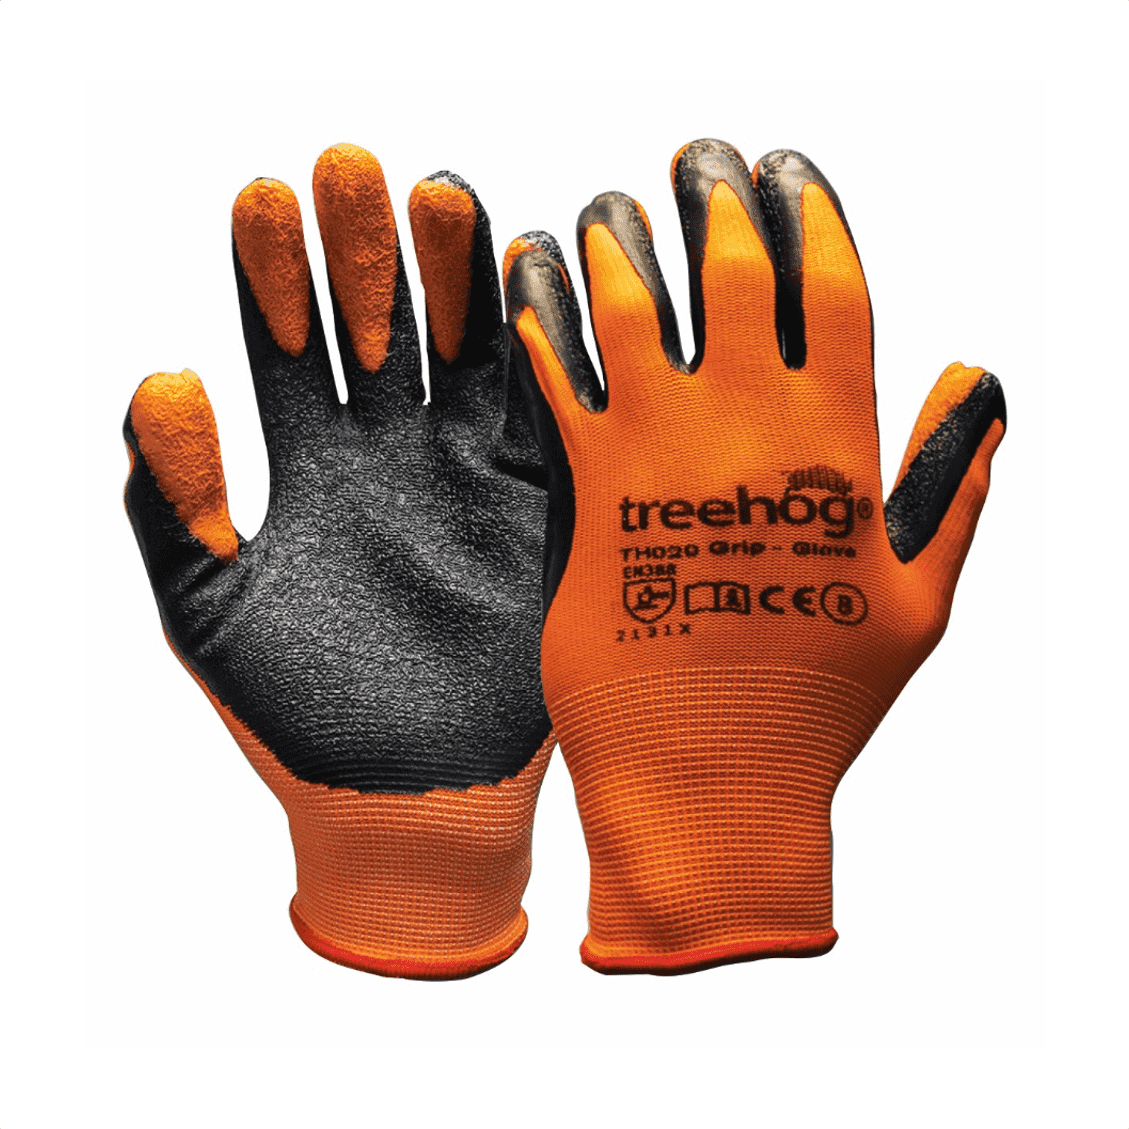 Treehog TH020 Gripflex Foresters Gripper Glove